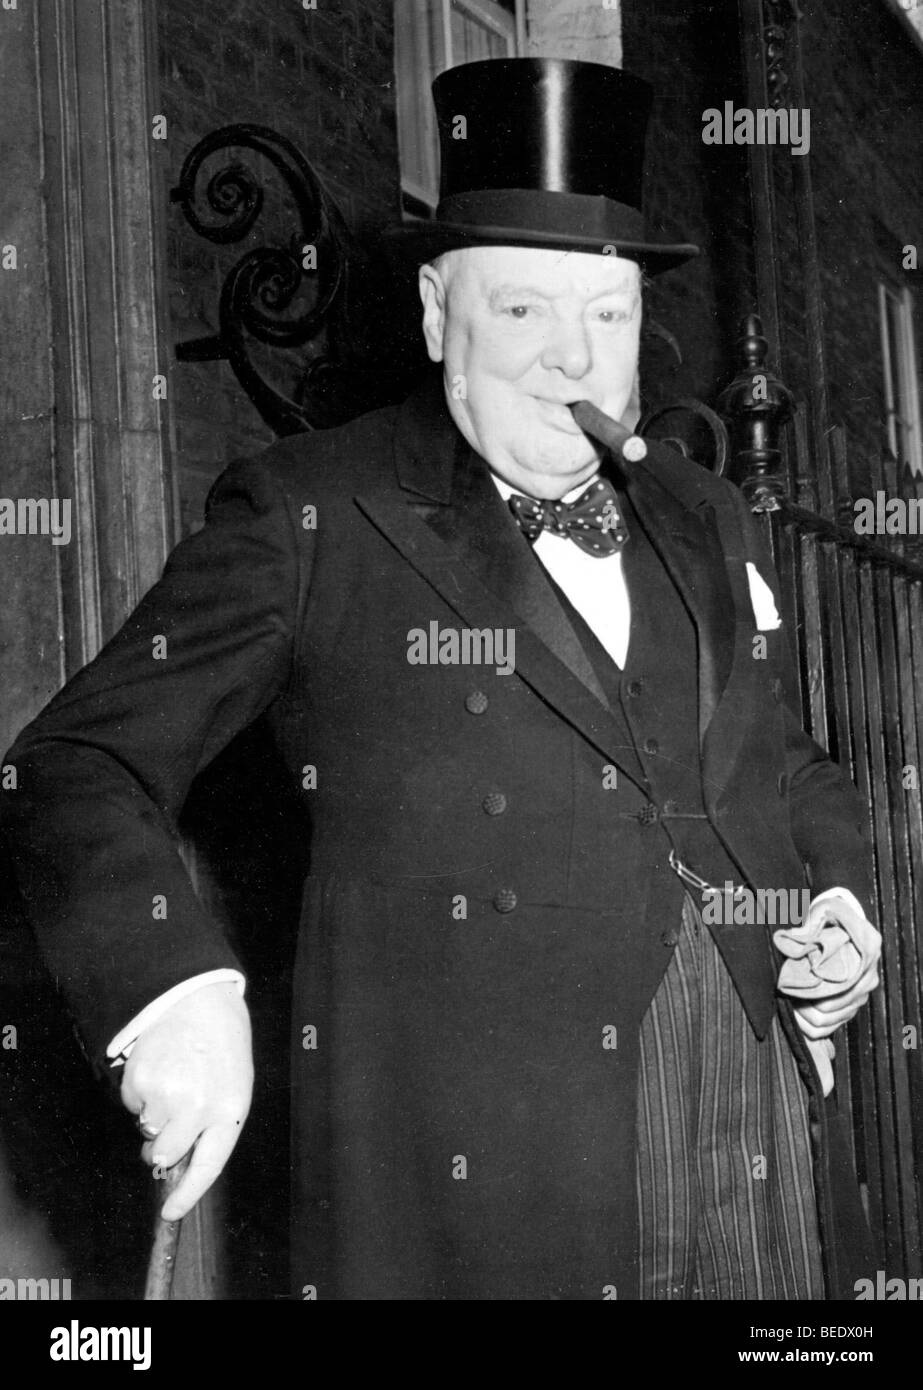 1000166 (900324) Sir Winston Churchill, Englischer Politiker (Premierminister) ritratto mit circuizione beruehmten Zigarre und Hut Foto Stock